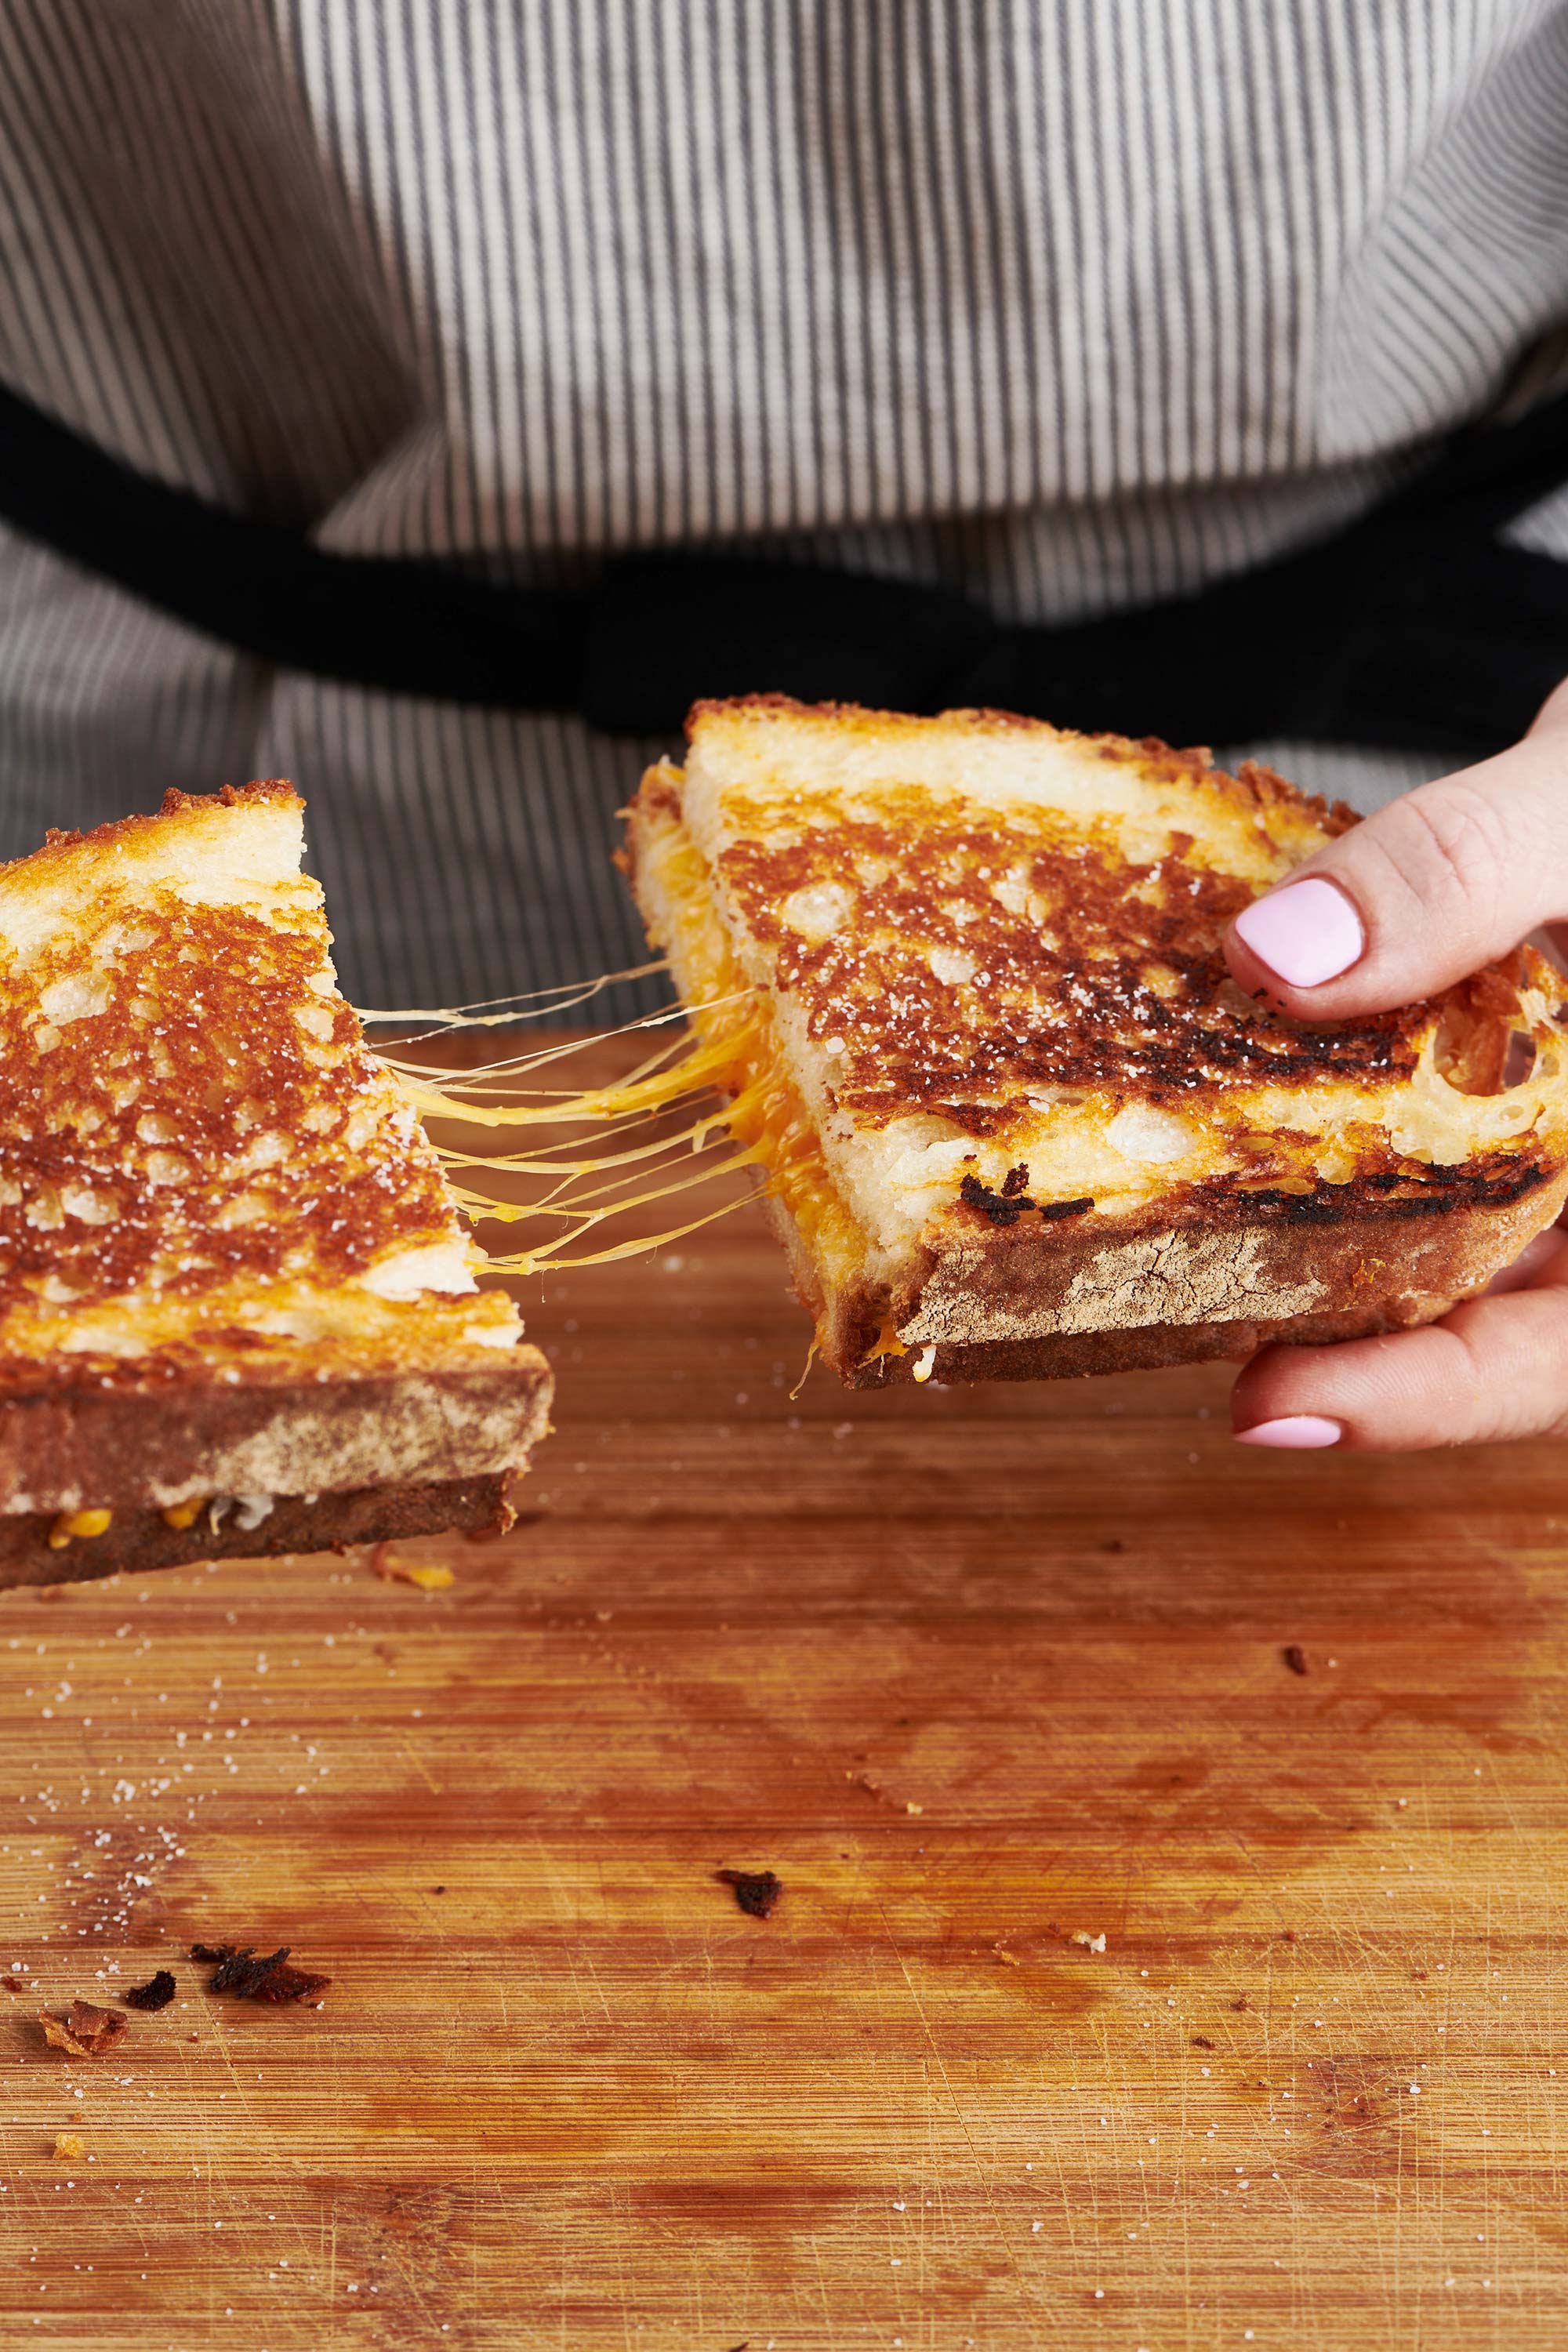 Woman pulling apart a warm grilled cheese sandwich cut in half.